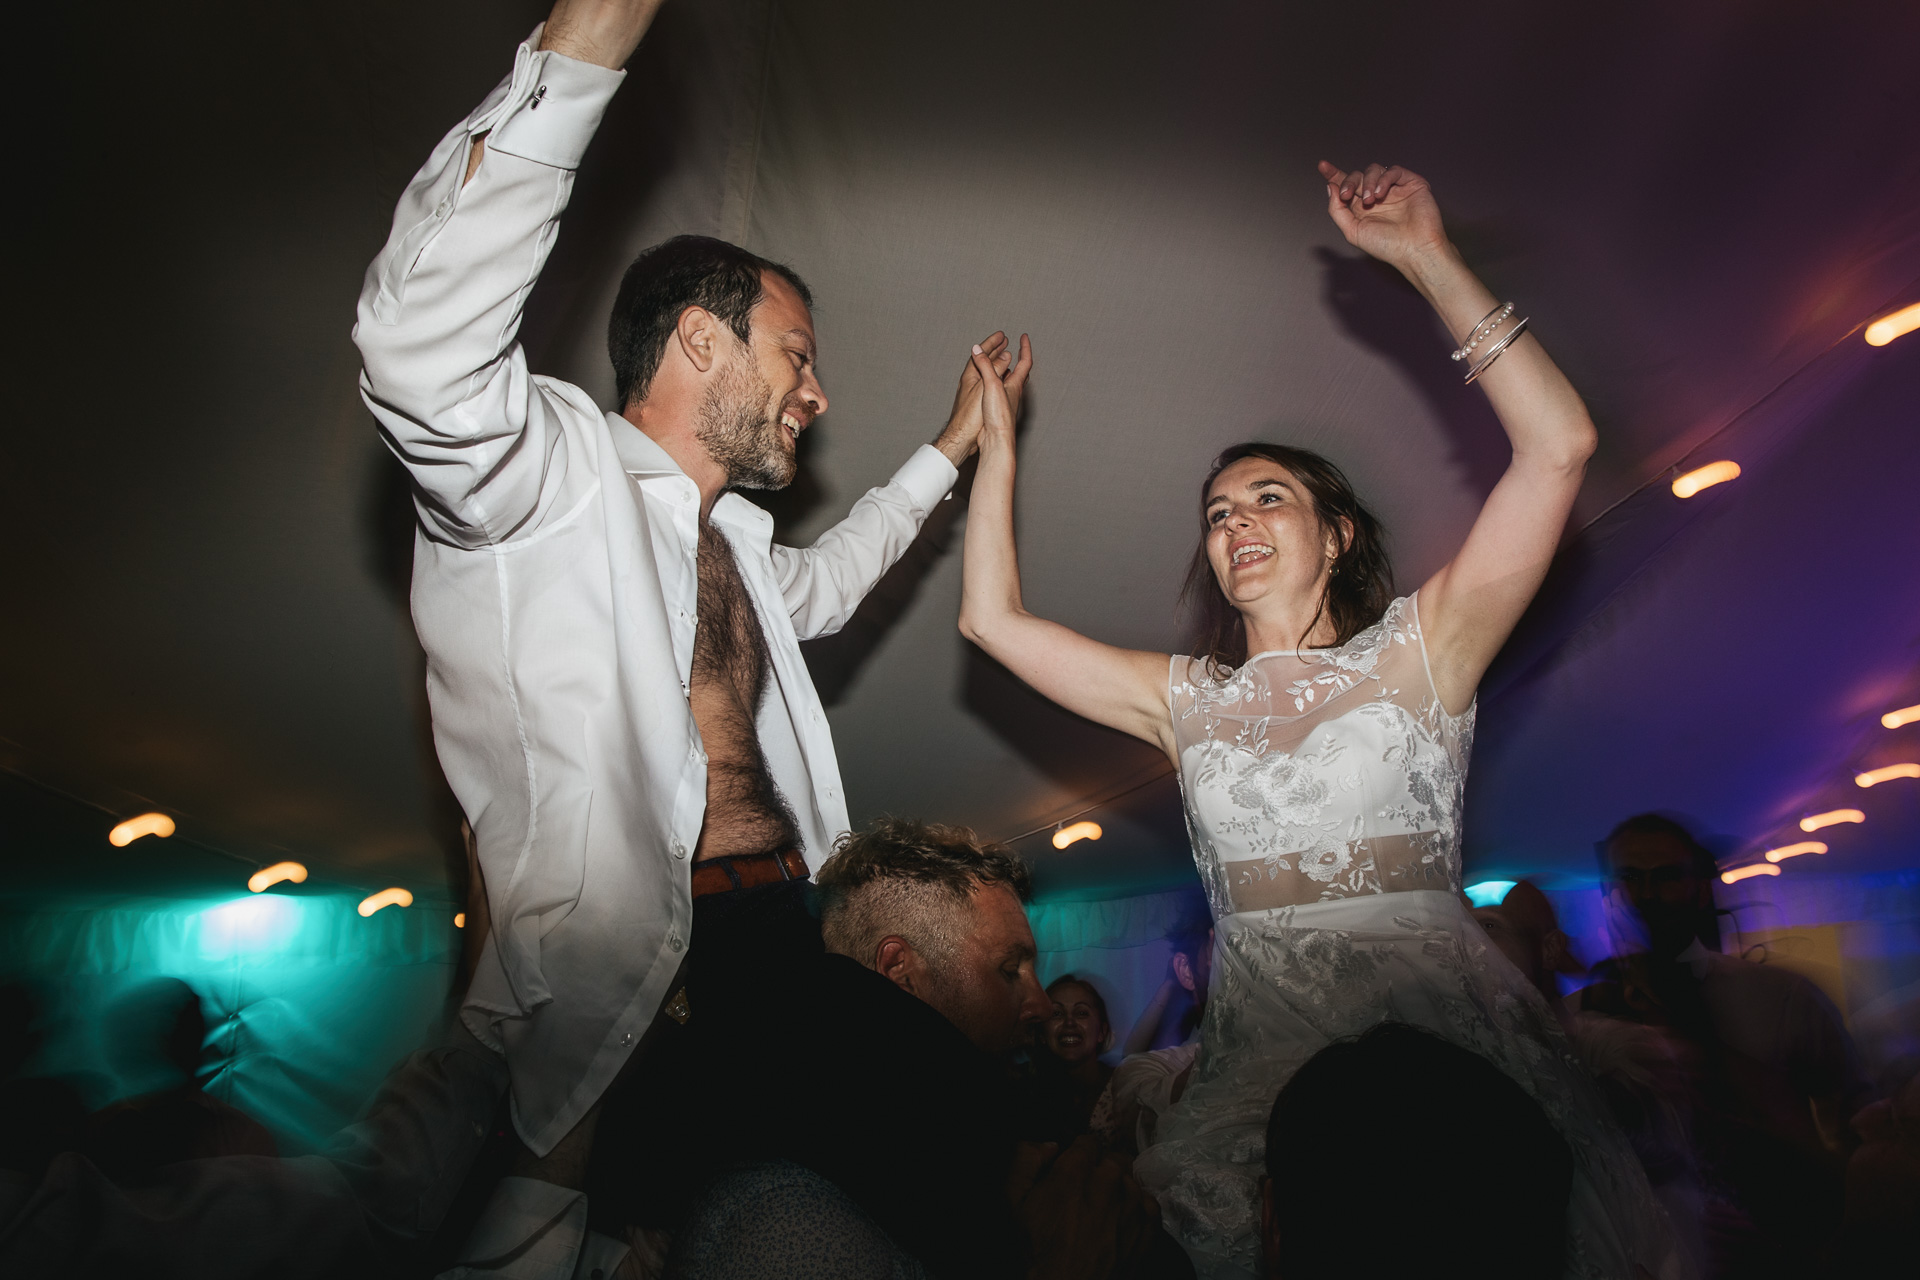 Bride and groom dancing on guests shoulders